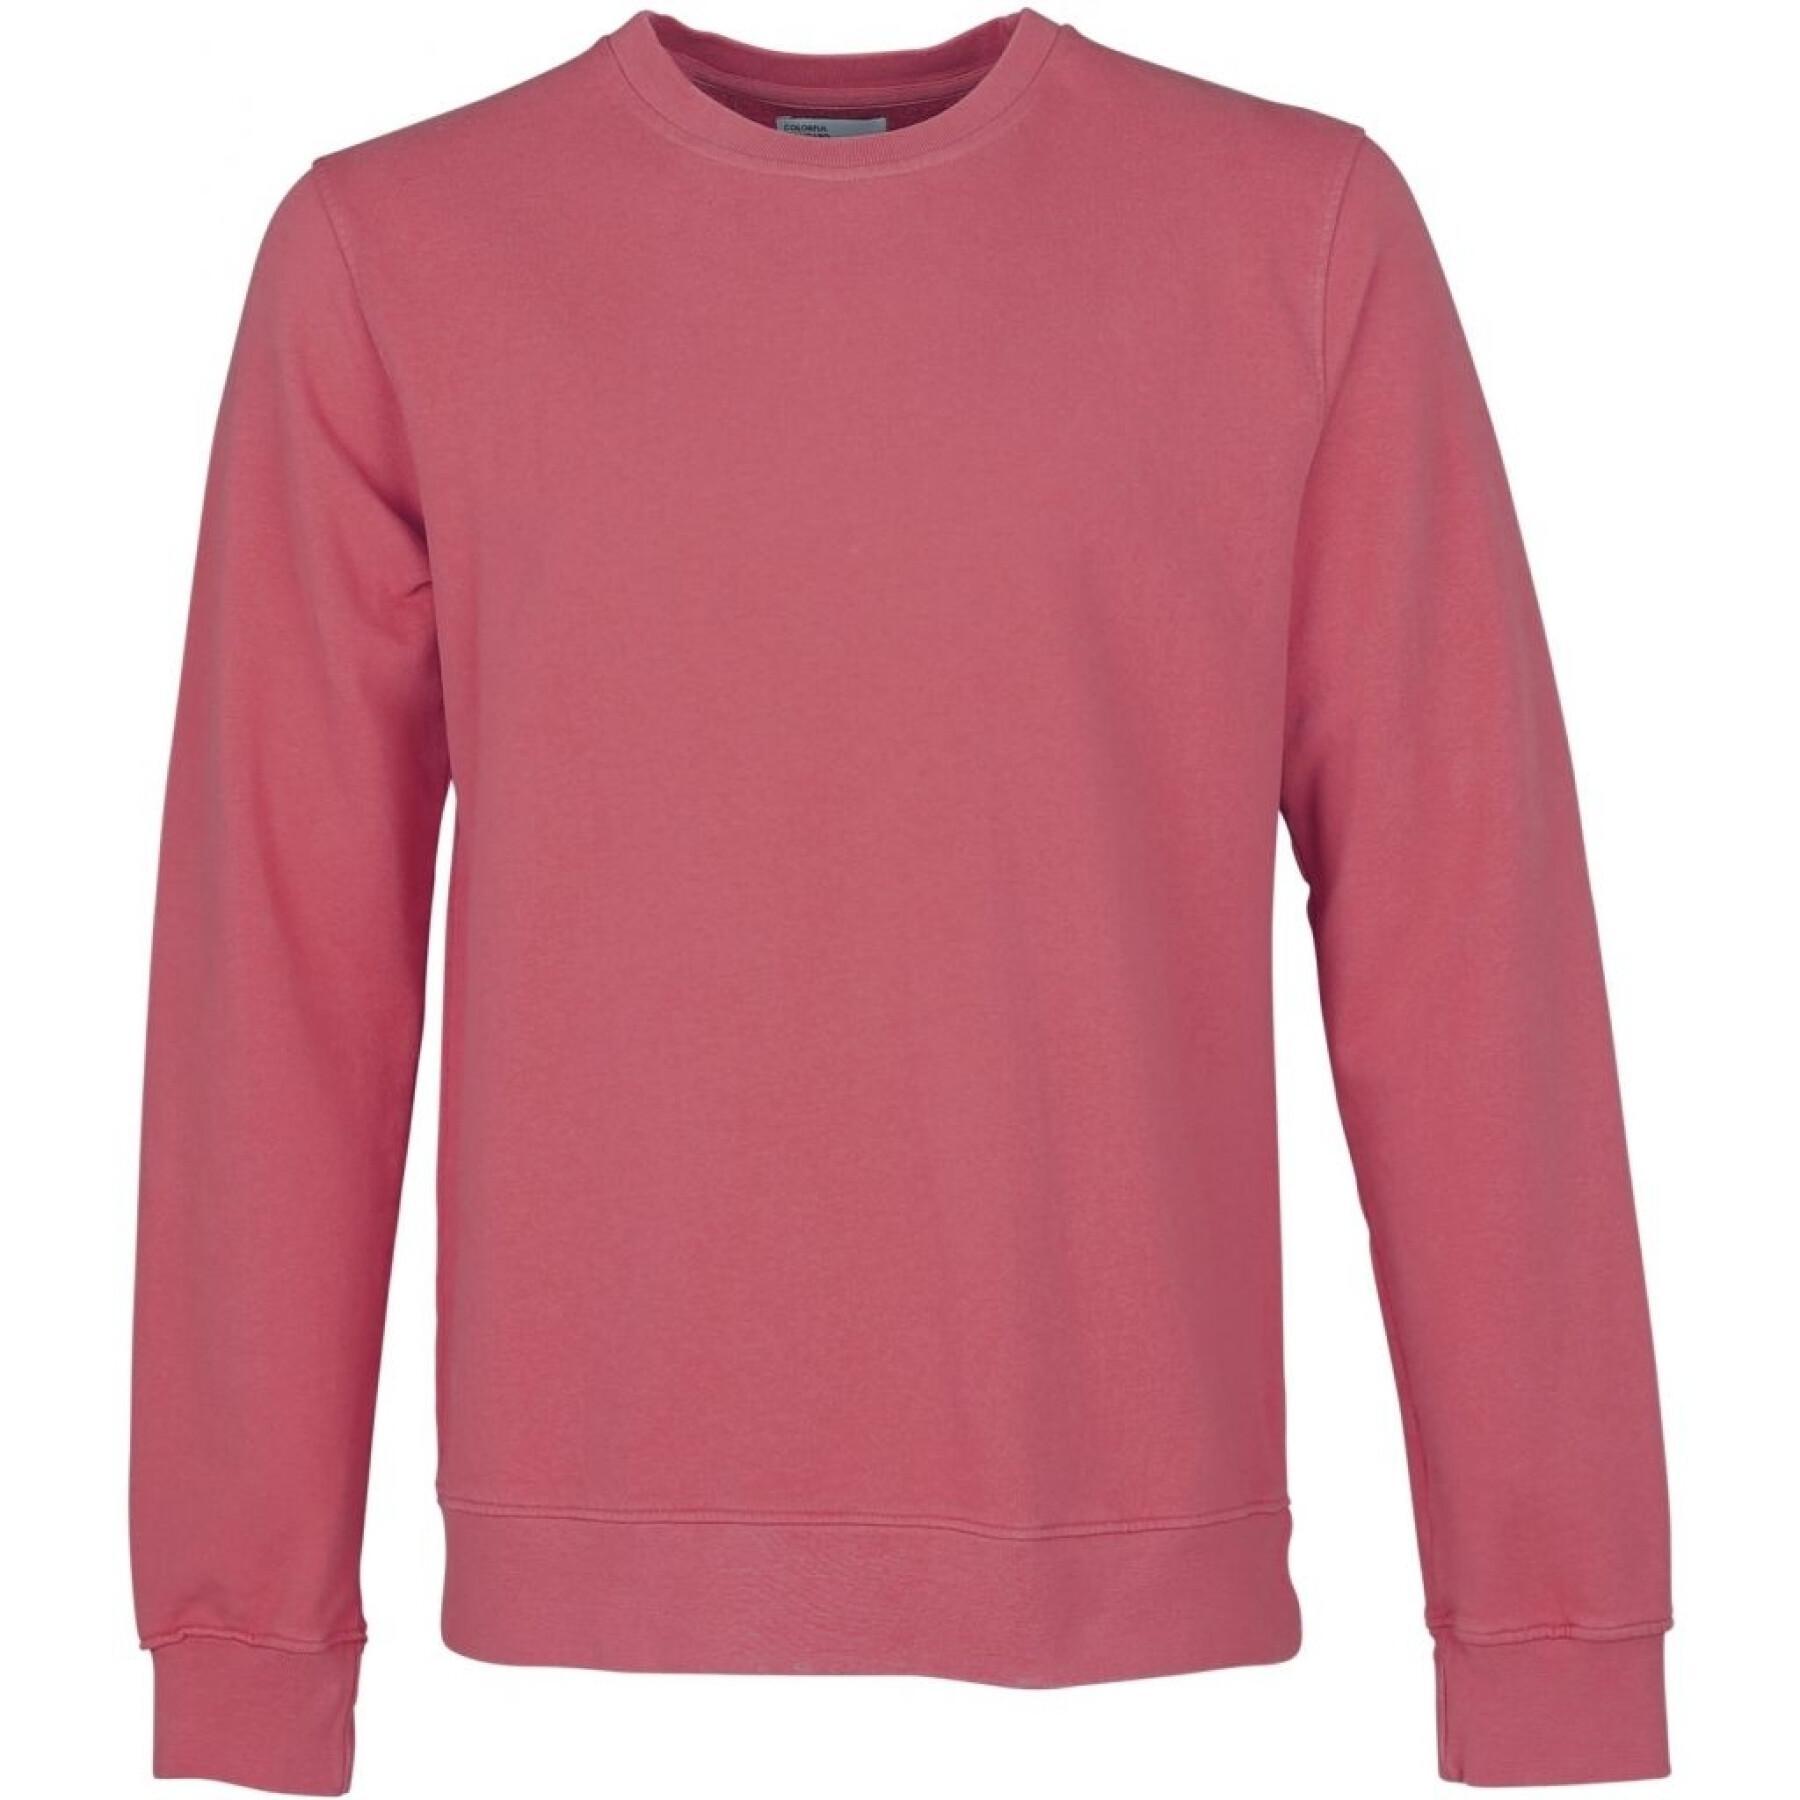 Sweatshirt mit Rundhalsausschnitt Colorful Standard Classic Organic raspberry pink